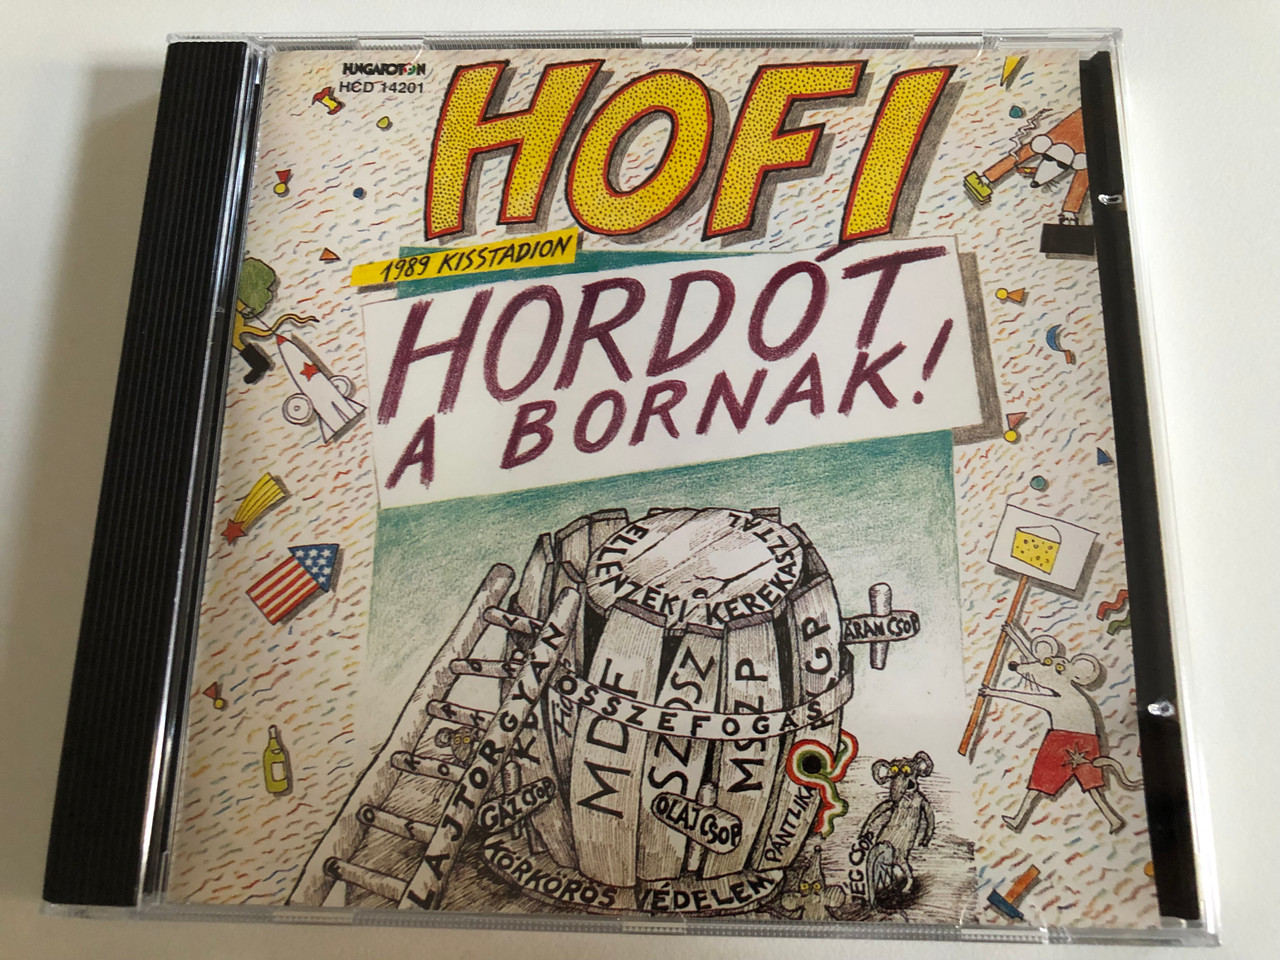 Hofi – Hordót A Bornak! (1989 Kisstadion) / Hungaroton Audio CD 2001 / HCD  14201 - bibleinmylanguage